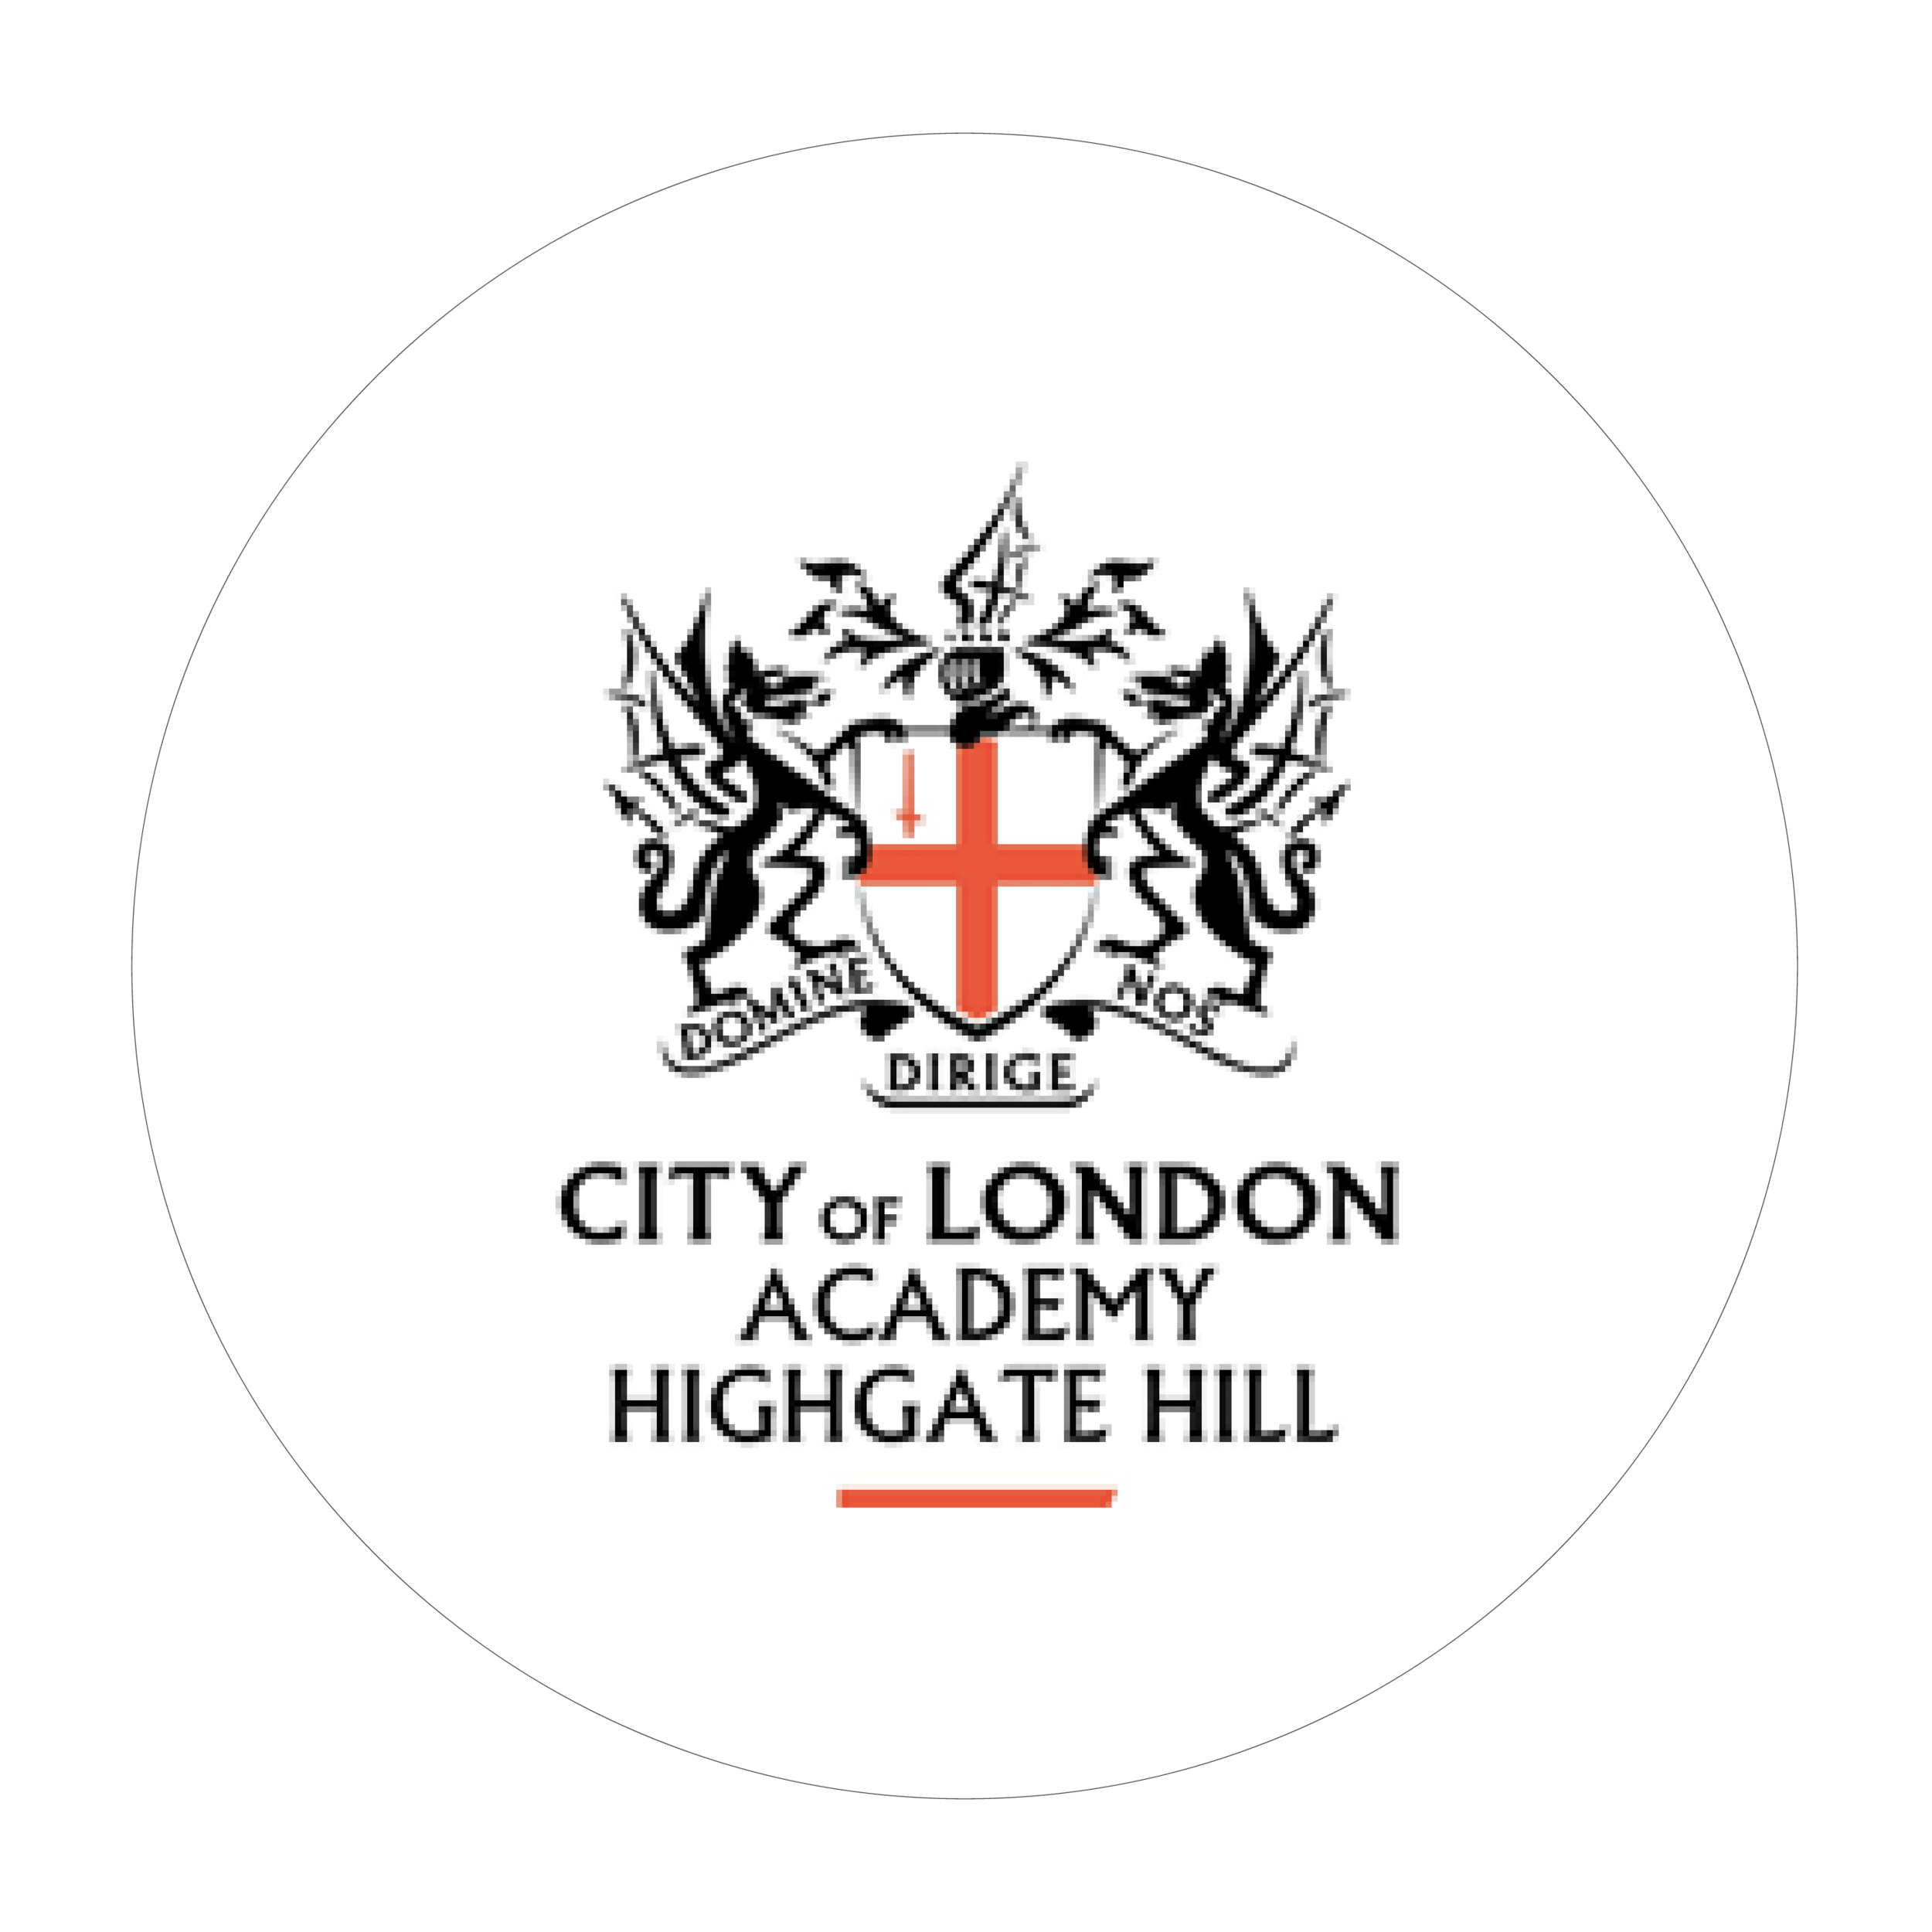 City of London Academy, Highgate Hill